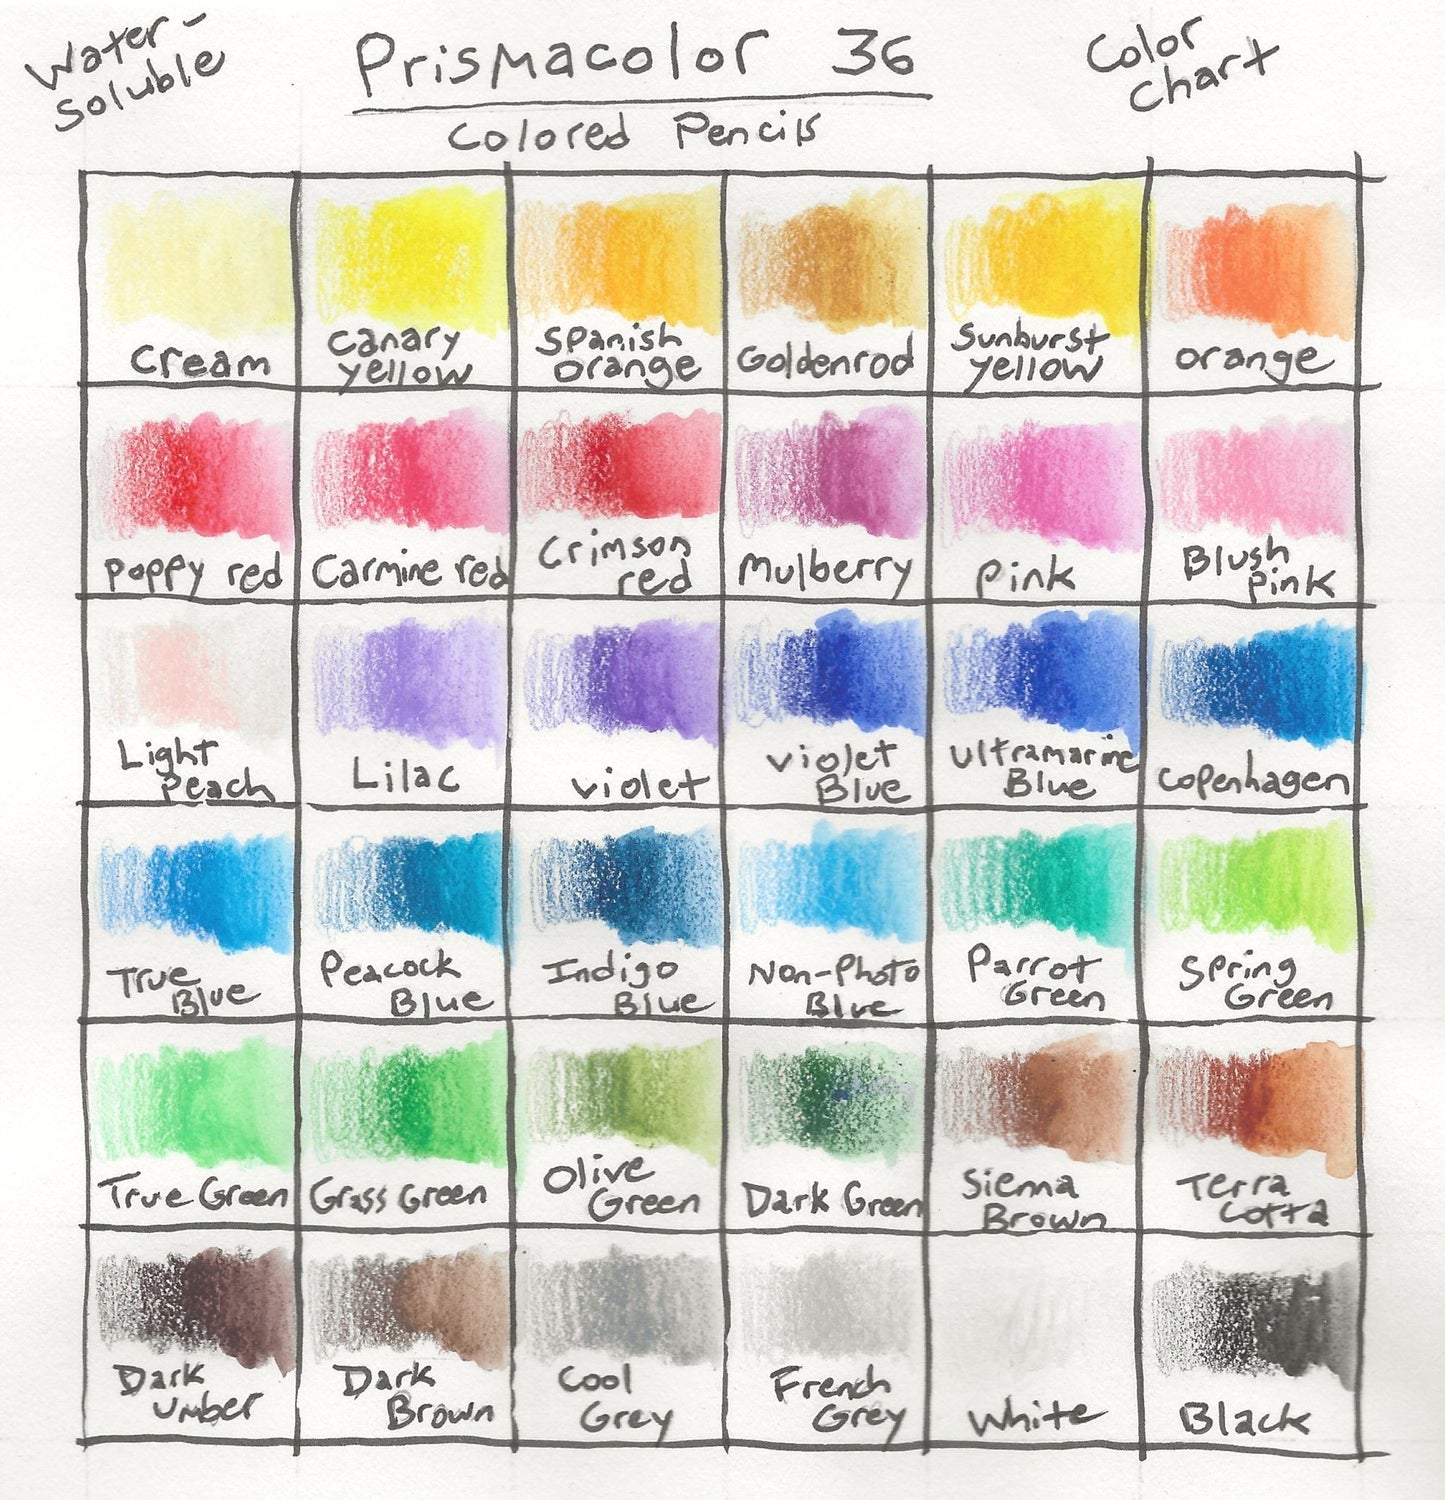 Prismacolor Premier aquarelpotlood, 12CT